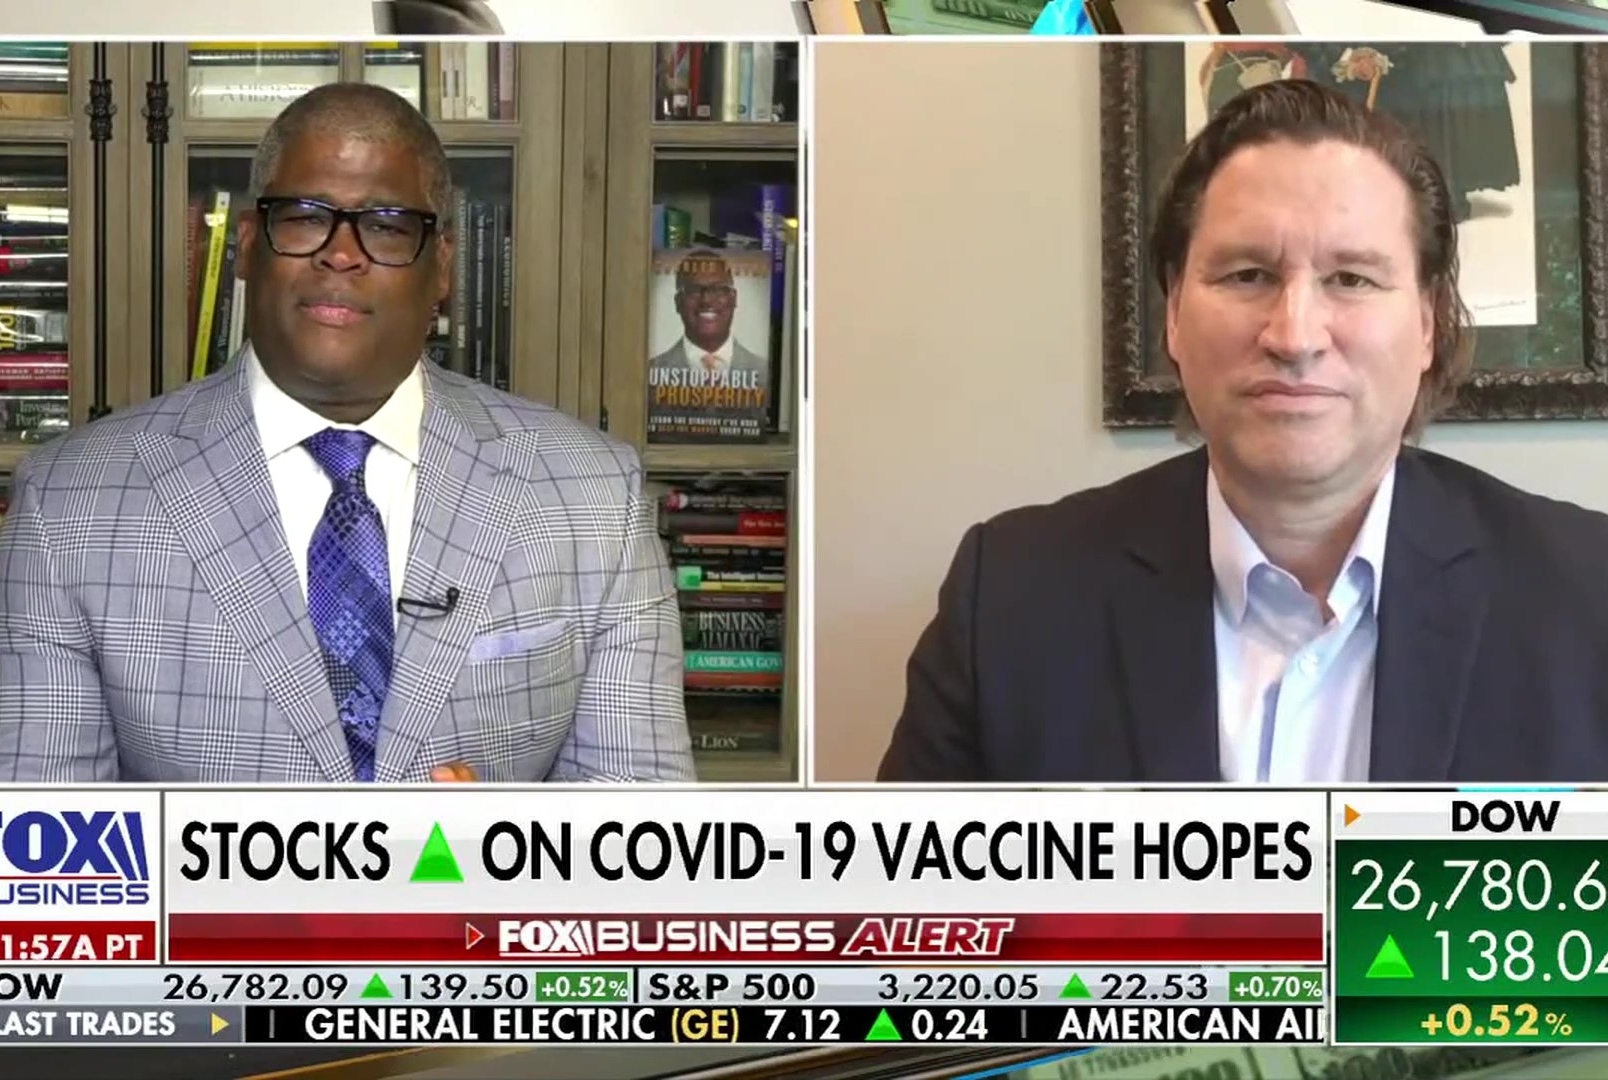 Stocks rise on Covid-19 vaccine hopes